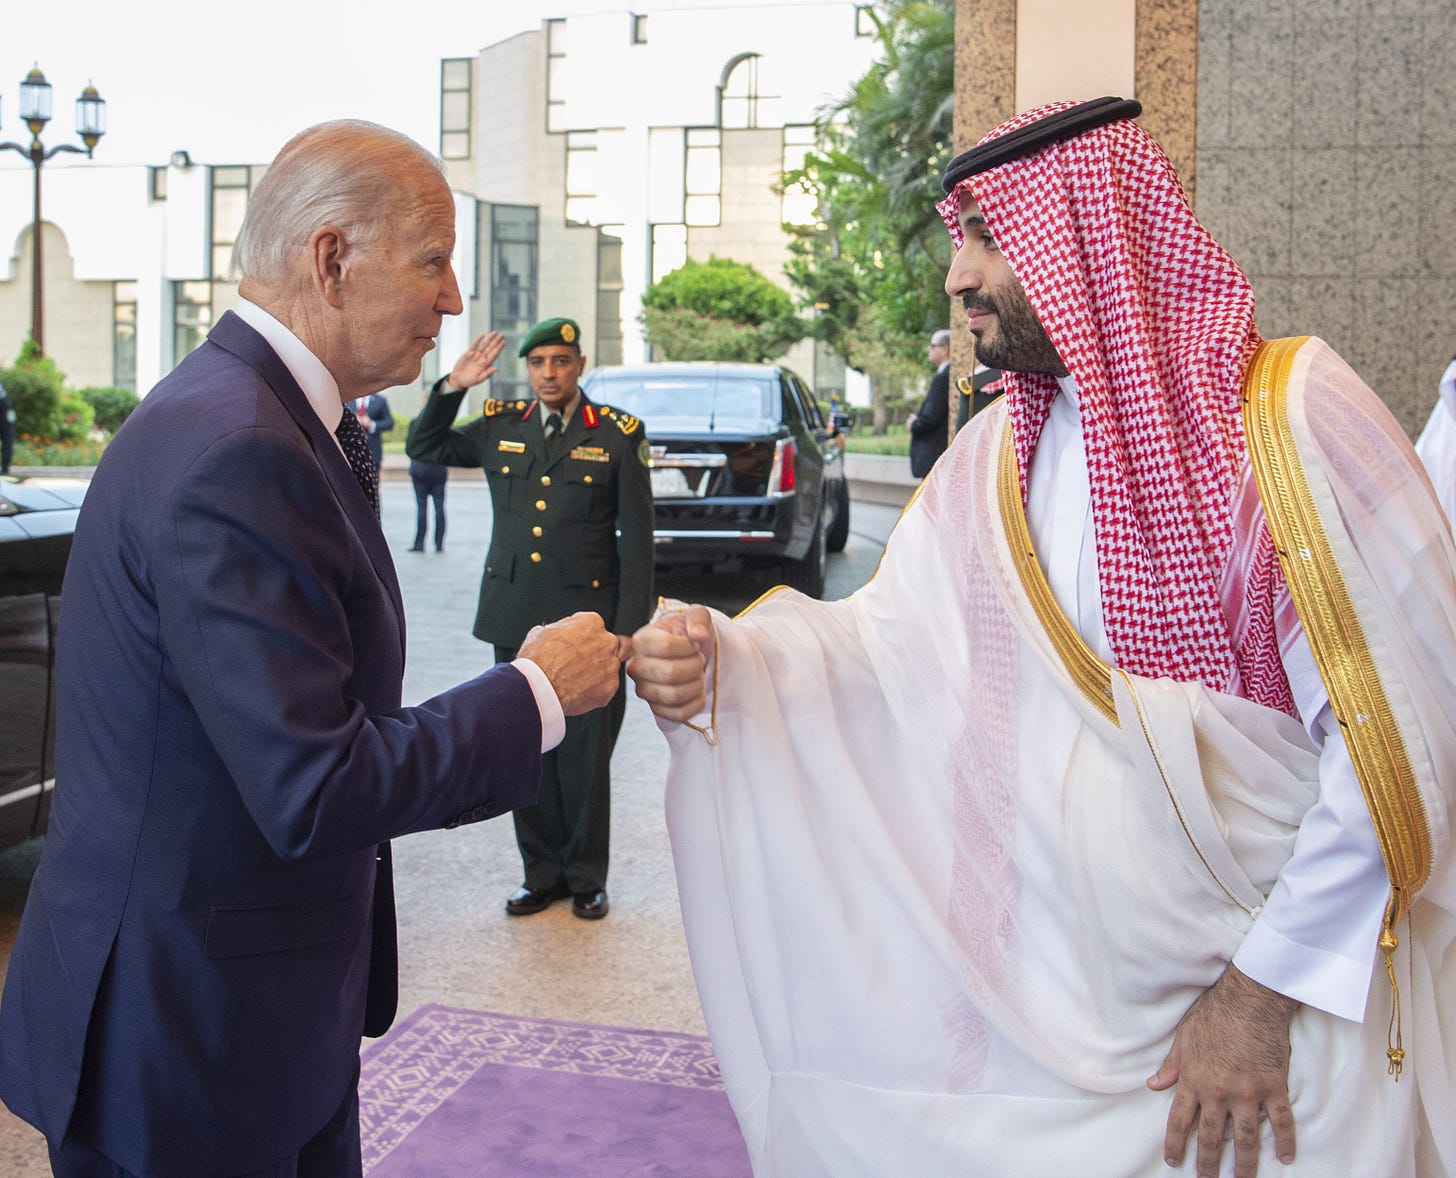 (President Joe Biden fist bumps Saudi Crown Prince Mohammed bin Salman in Jeddah, Saudi Arabia, on July 15, 2022. Photo by Royal Court of Saudi Arabia/Handout/Anadolu Agency via Getty Image)